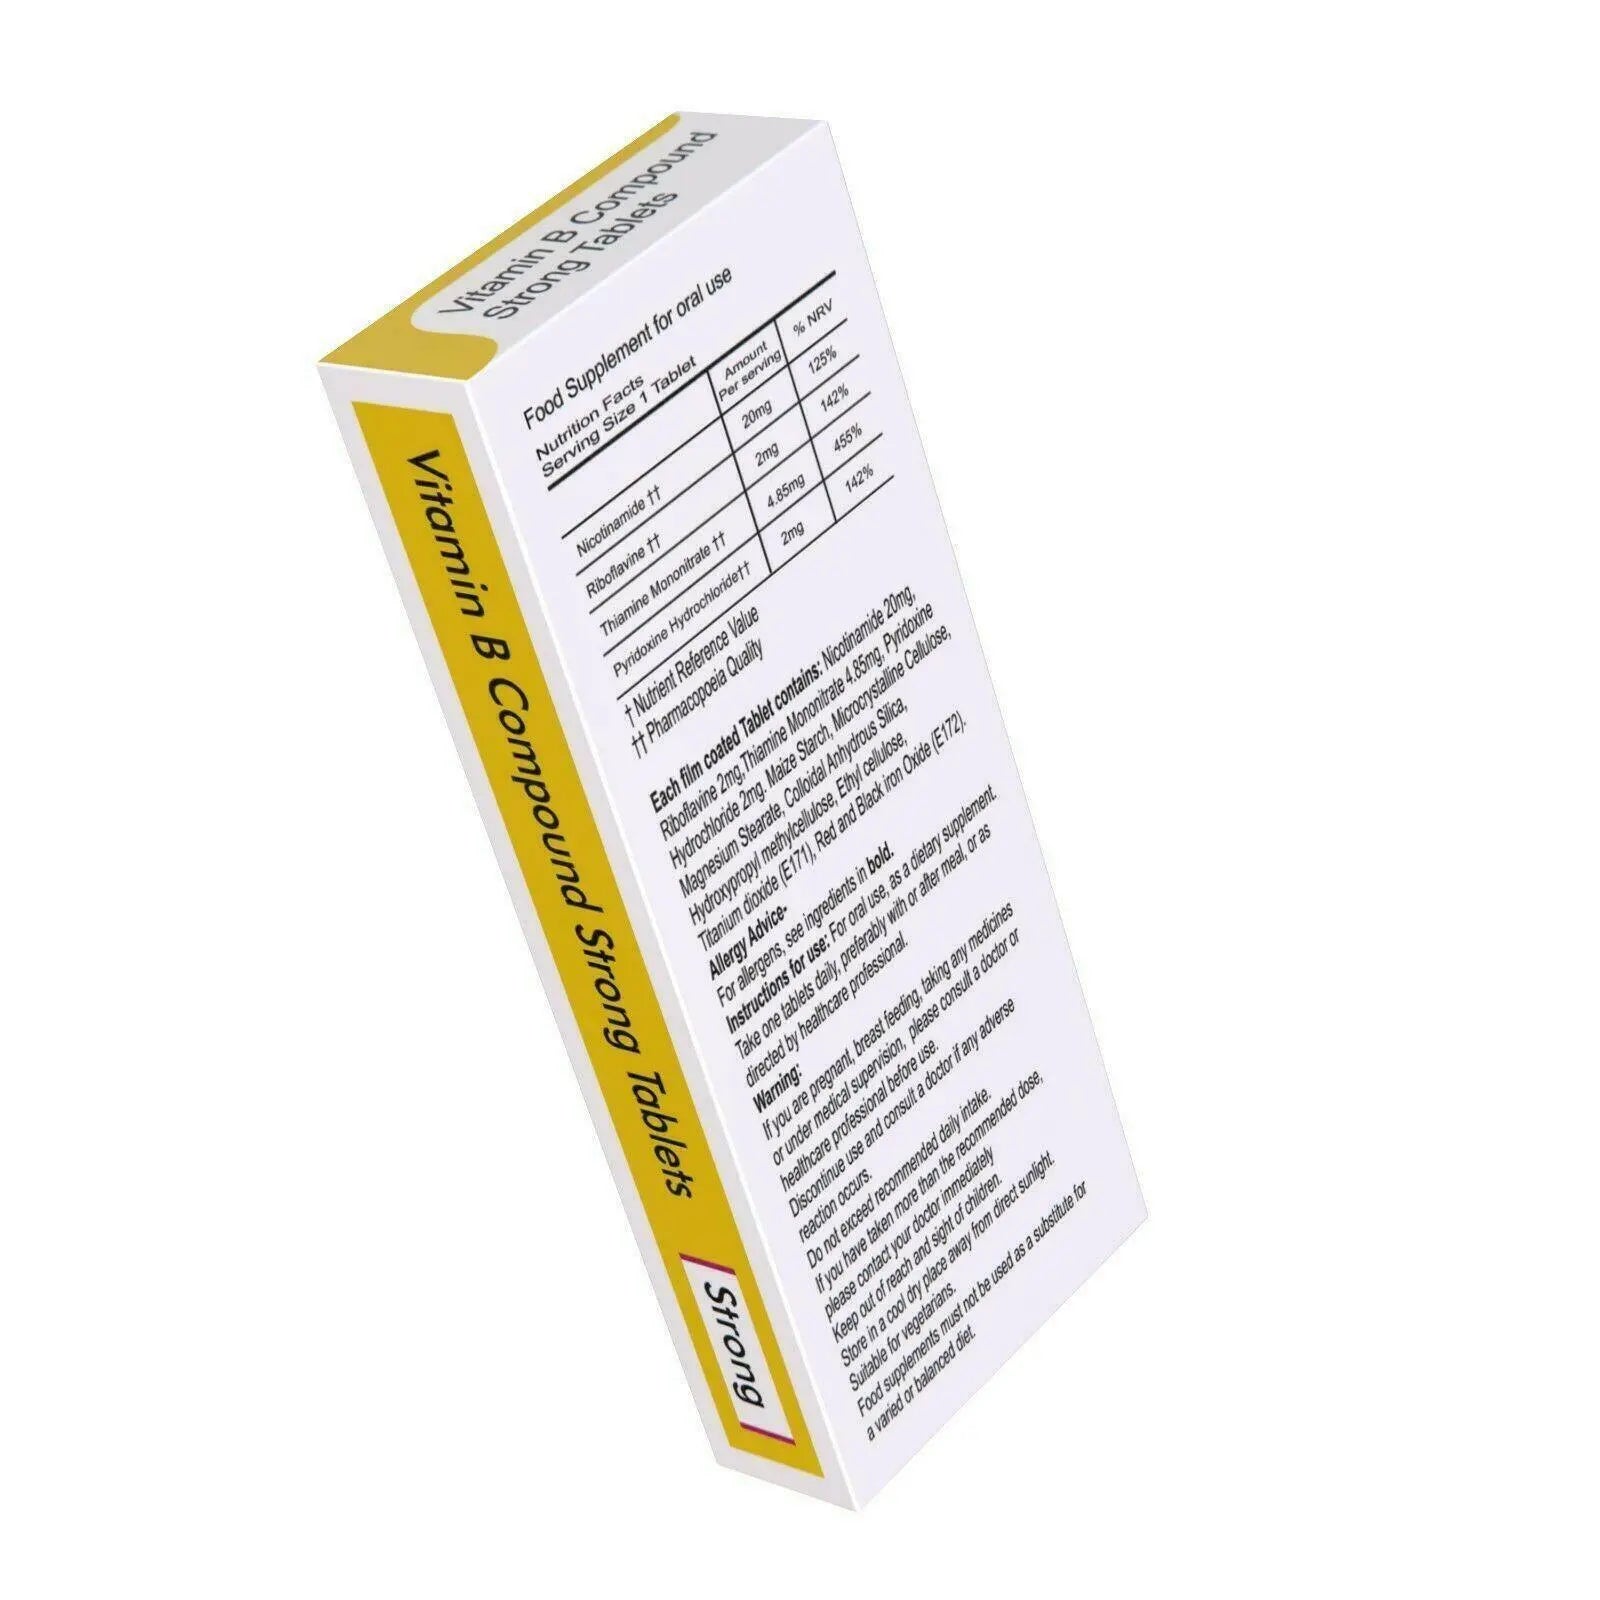 Vitamin B Compound Strong 28 tablets pack vitamin B1,B2,B6,B12 - Arc Health Nutrition UK Ltd 